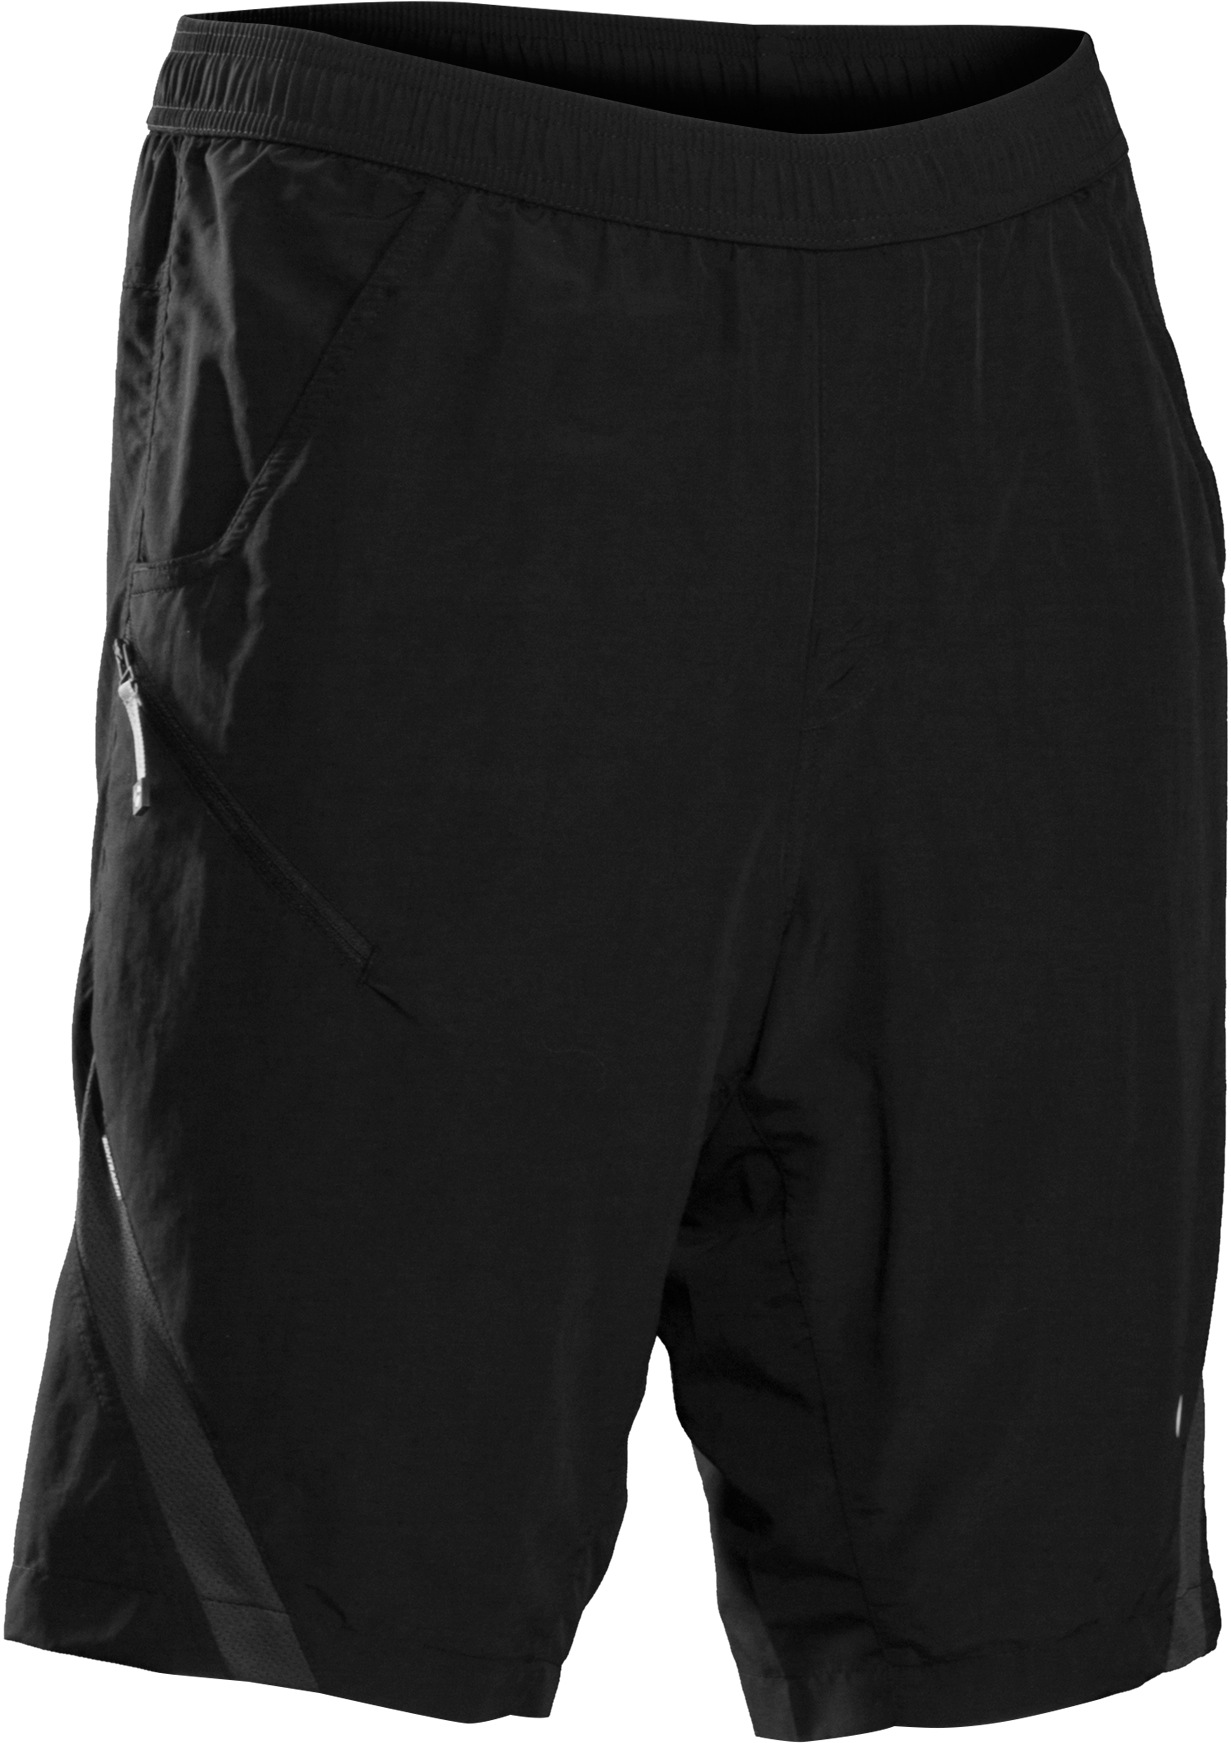 Bontrager Dual Sport Short - Mens - Shorts - Baggies - Clothing - Shop ...